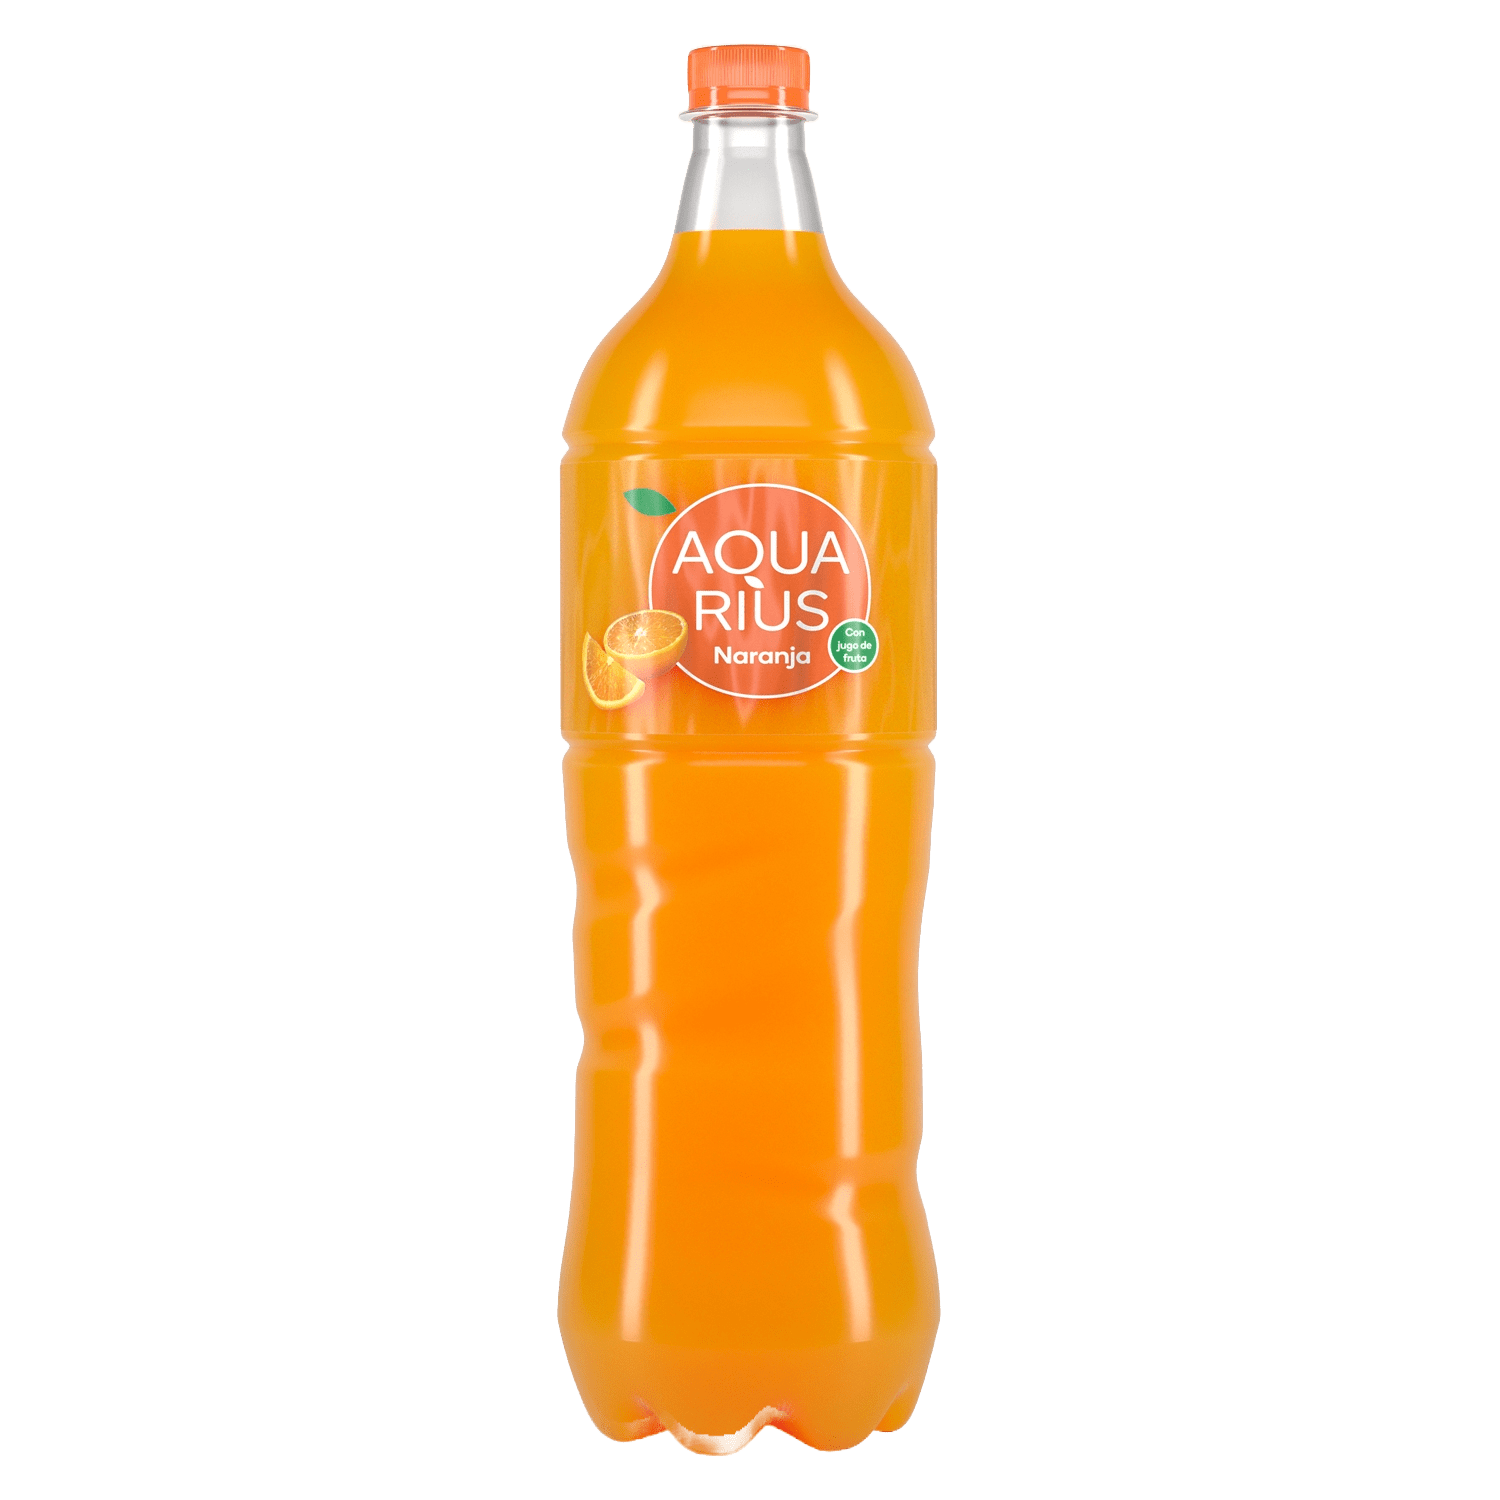 Botella de Aquarius Naranja 1,5L